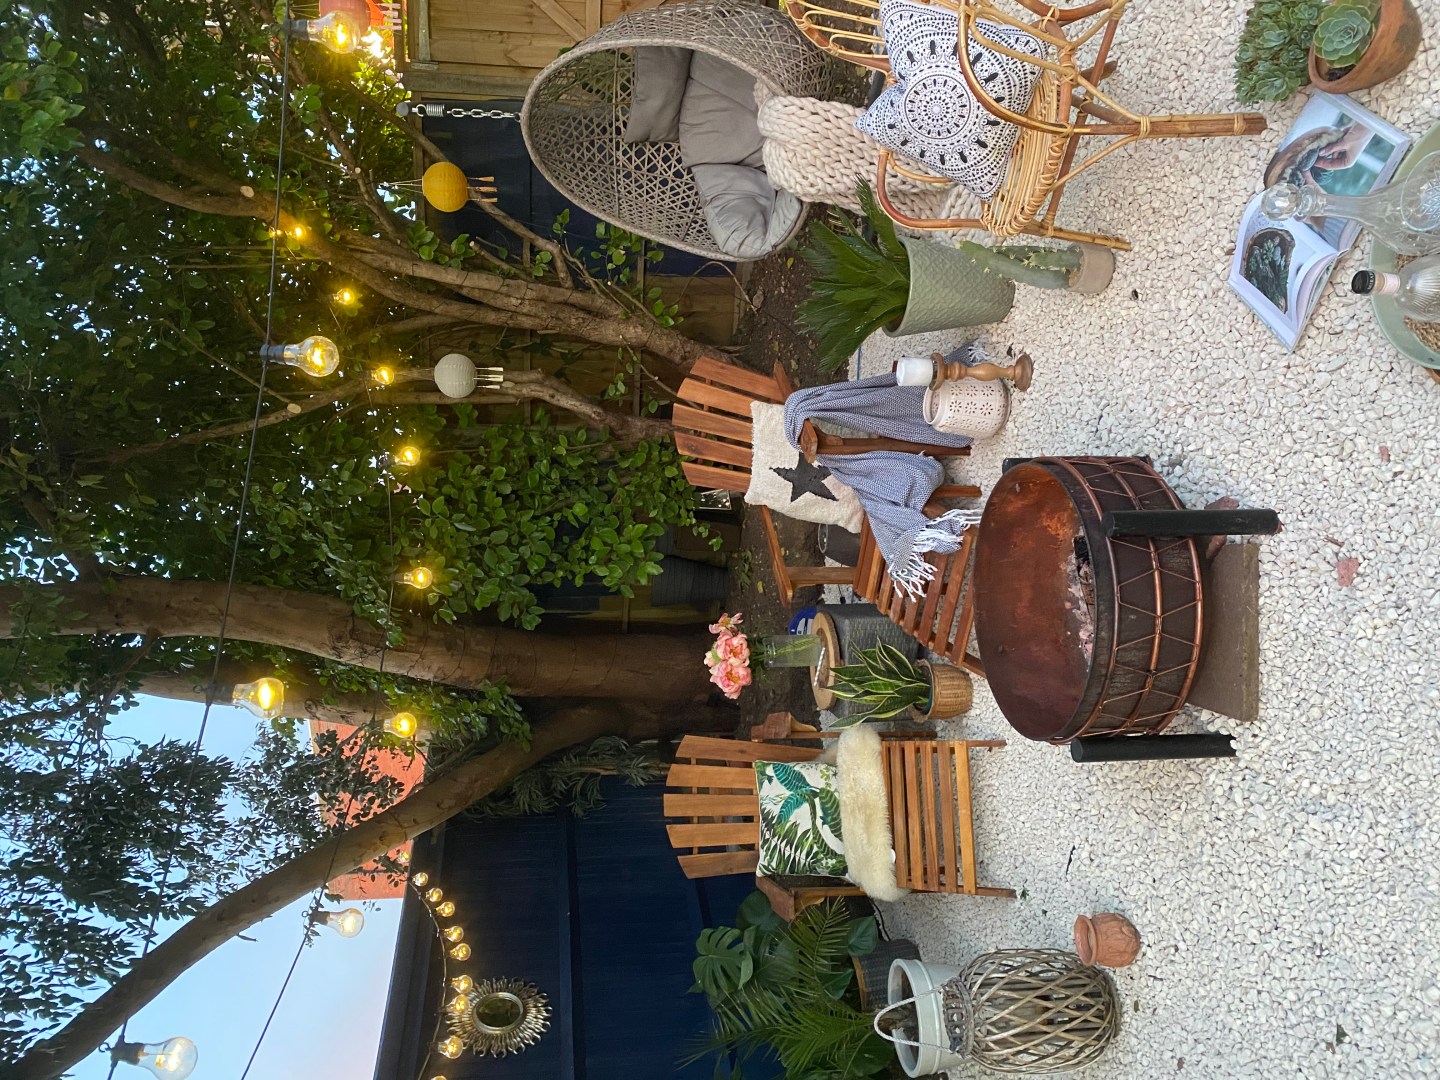 mediterranean garden with white gravel, blue fence, adirondack chairs and festoon lights